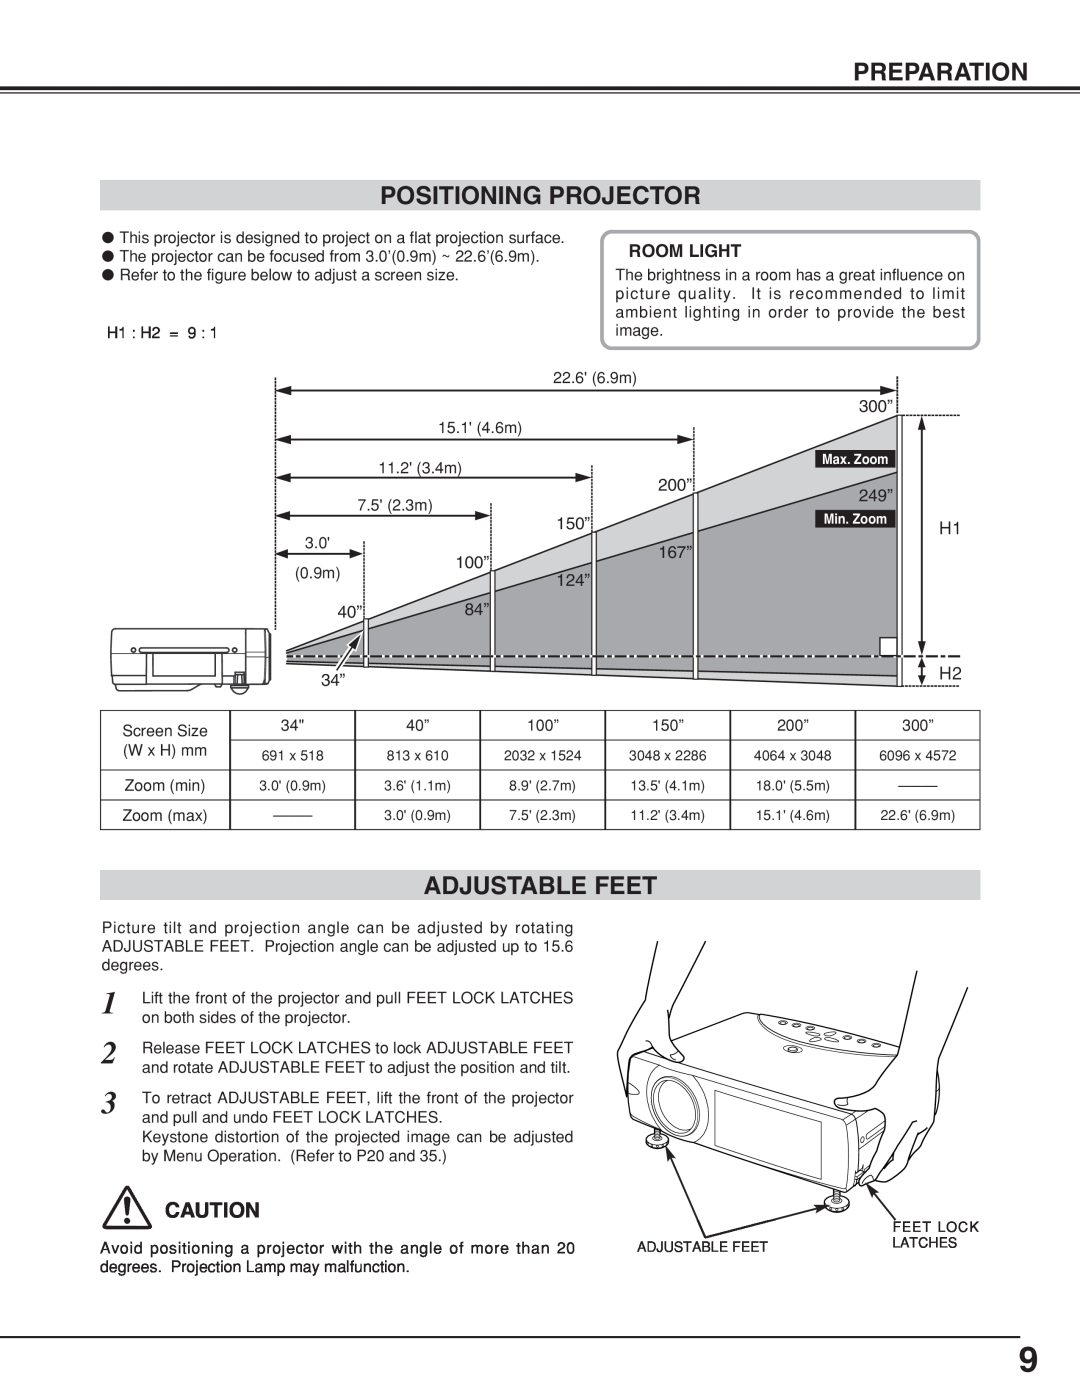 BOXLIGHT CP-19t manual Preparation Positioning Projector, Adjustable Feet, Room Light 